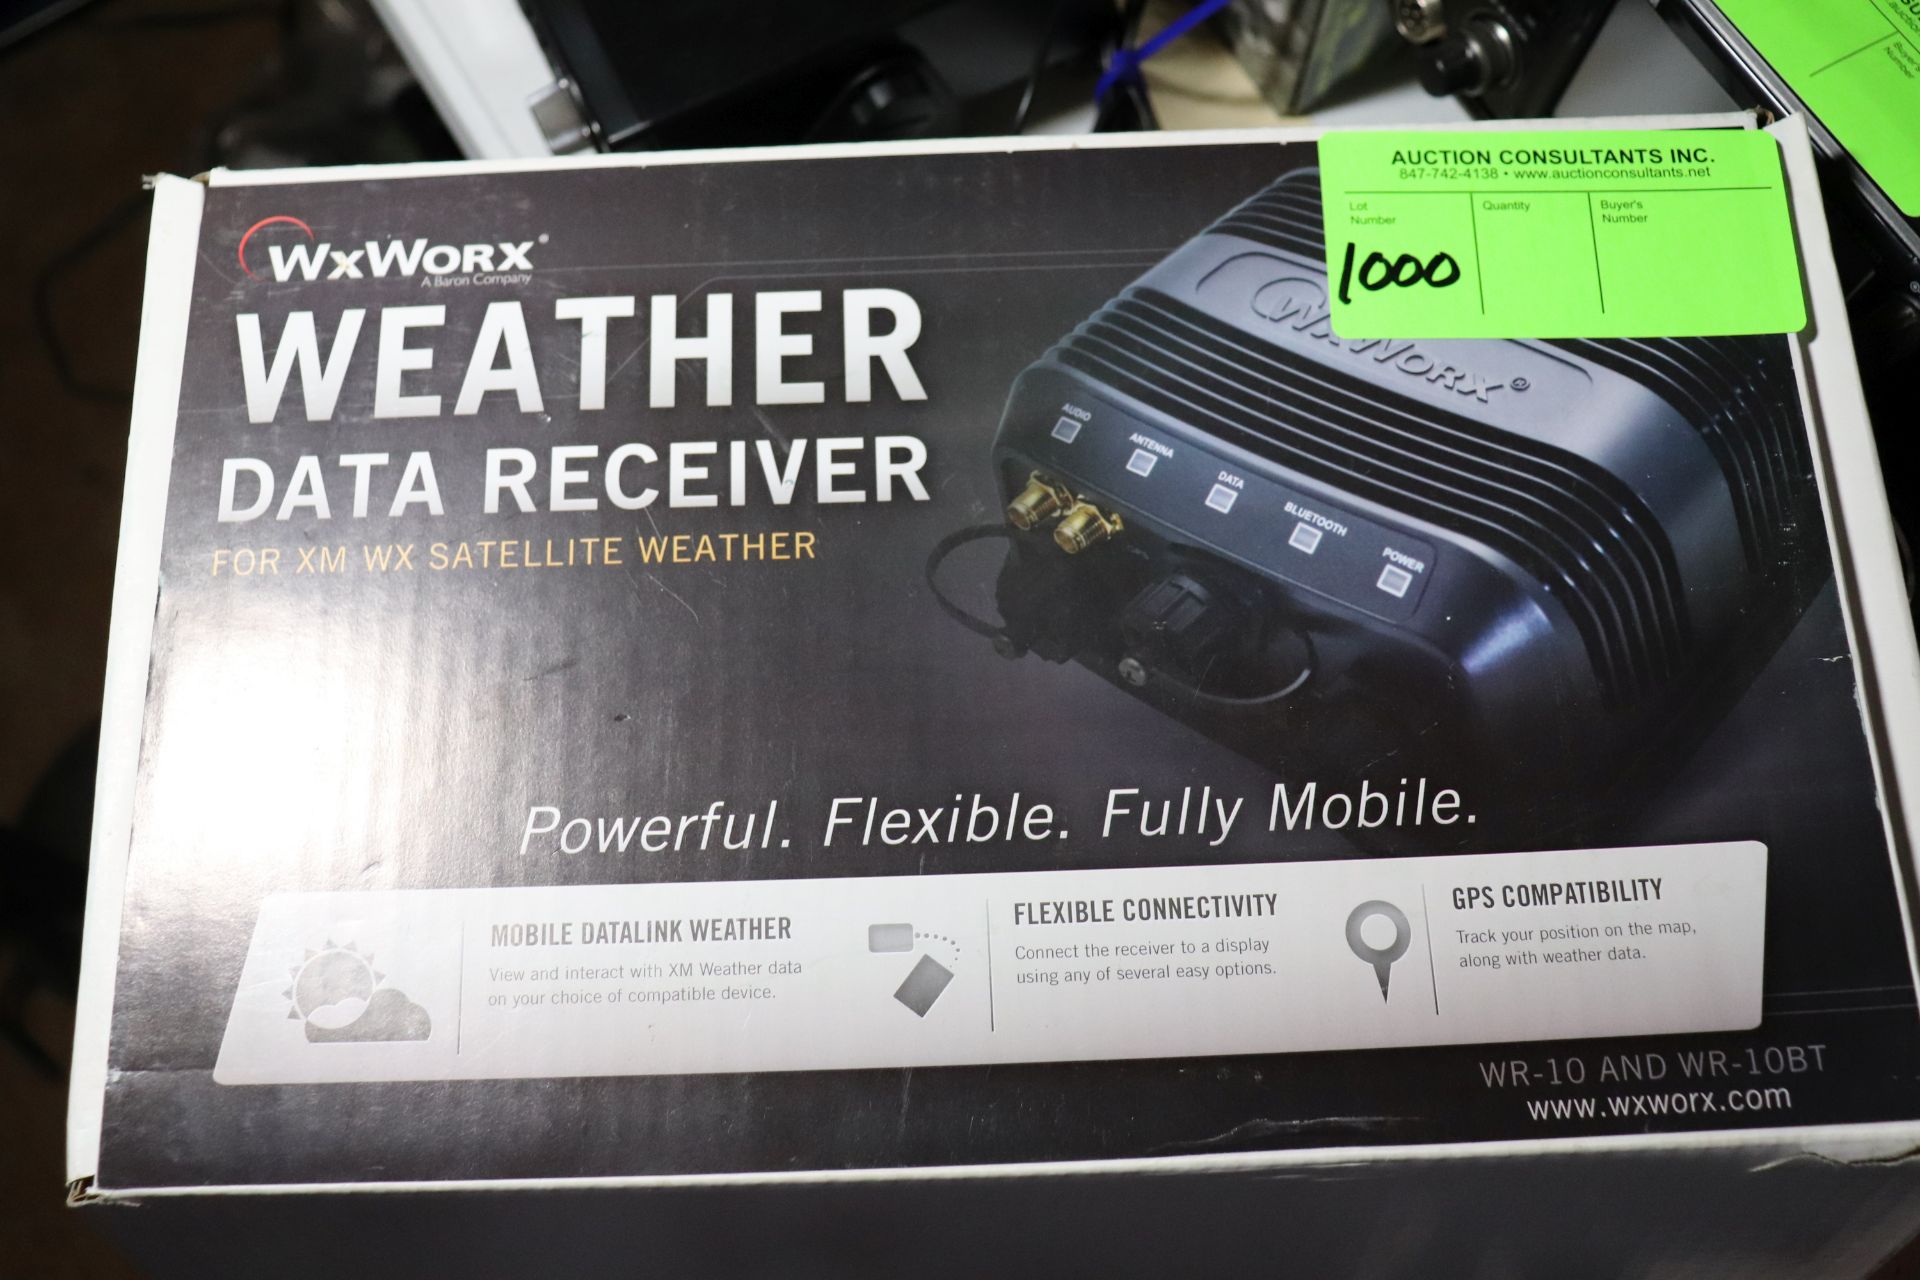 WxWrox Weather Data Receiver New